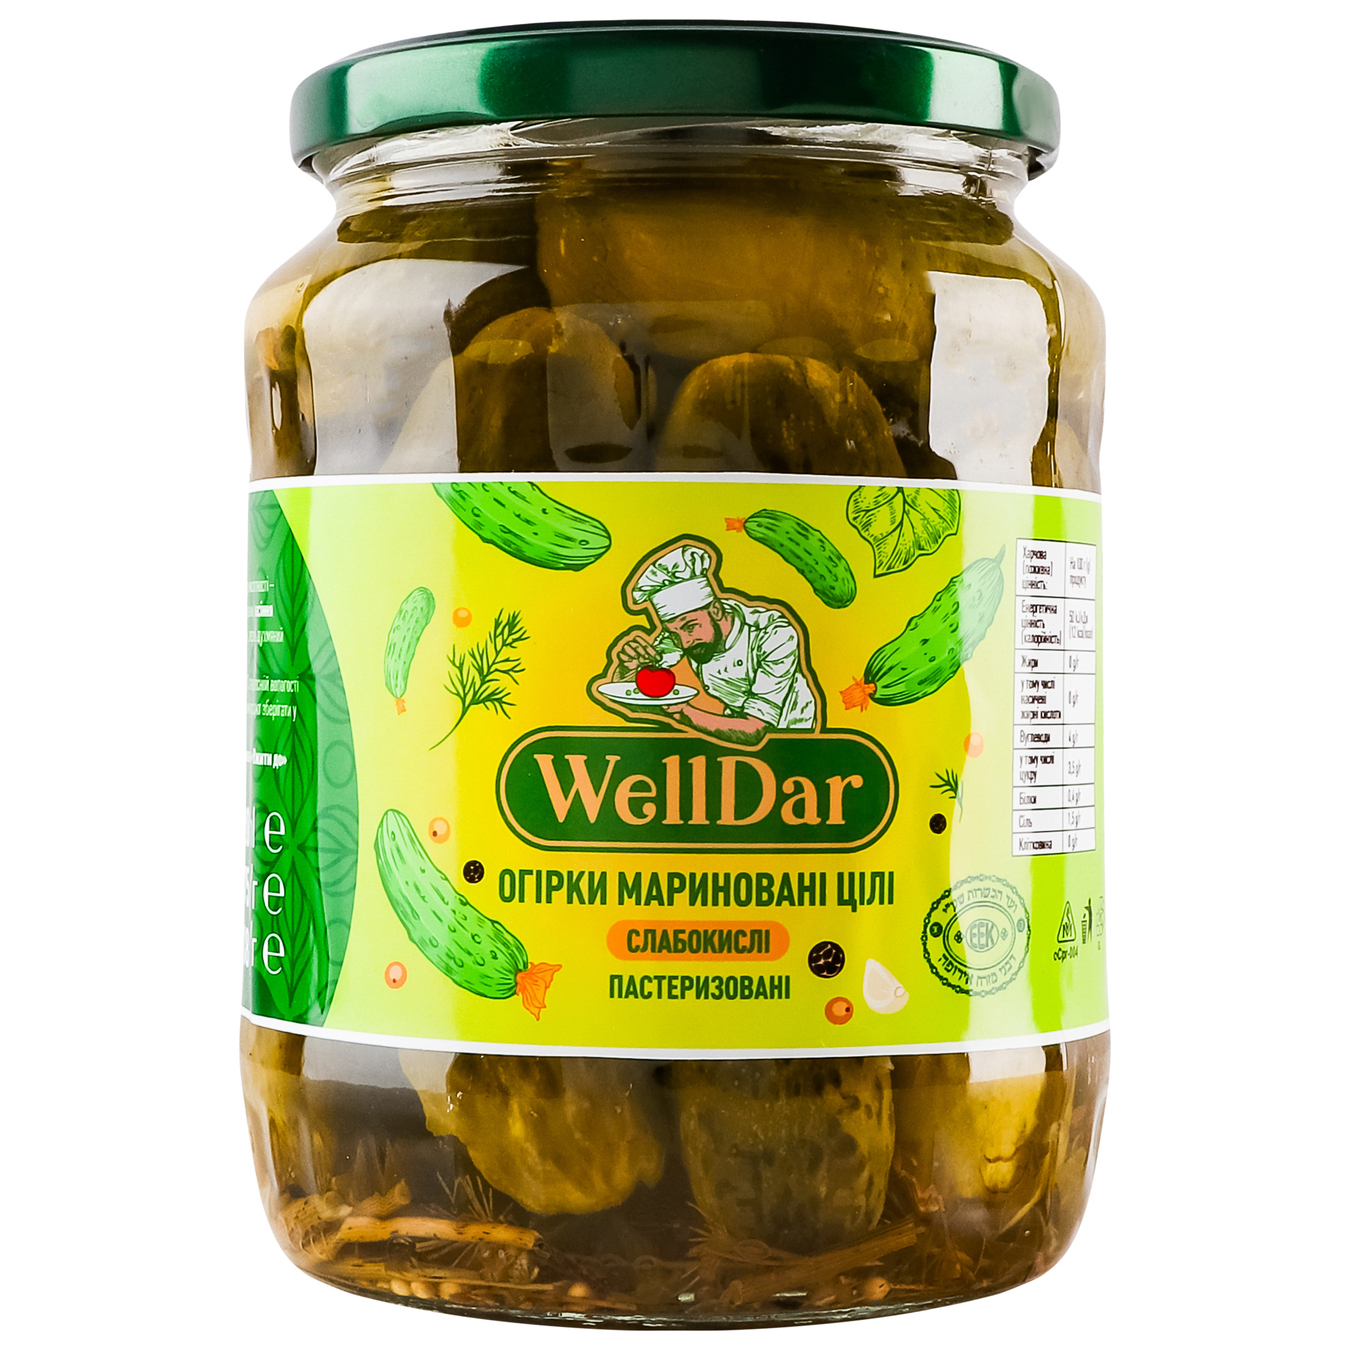 WellDar pickled cucumbers 720 ml